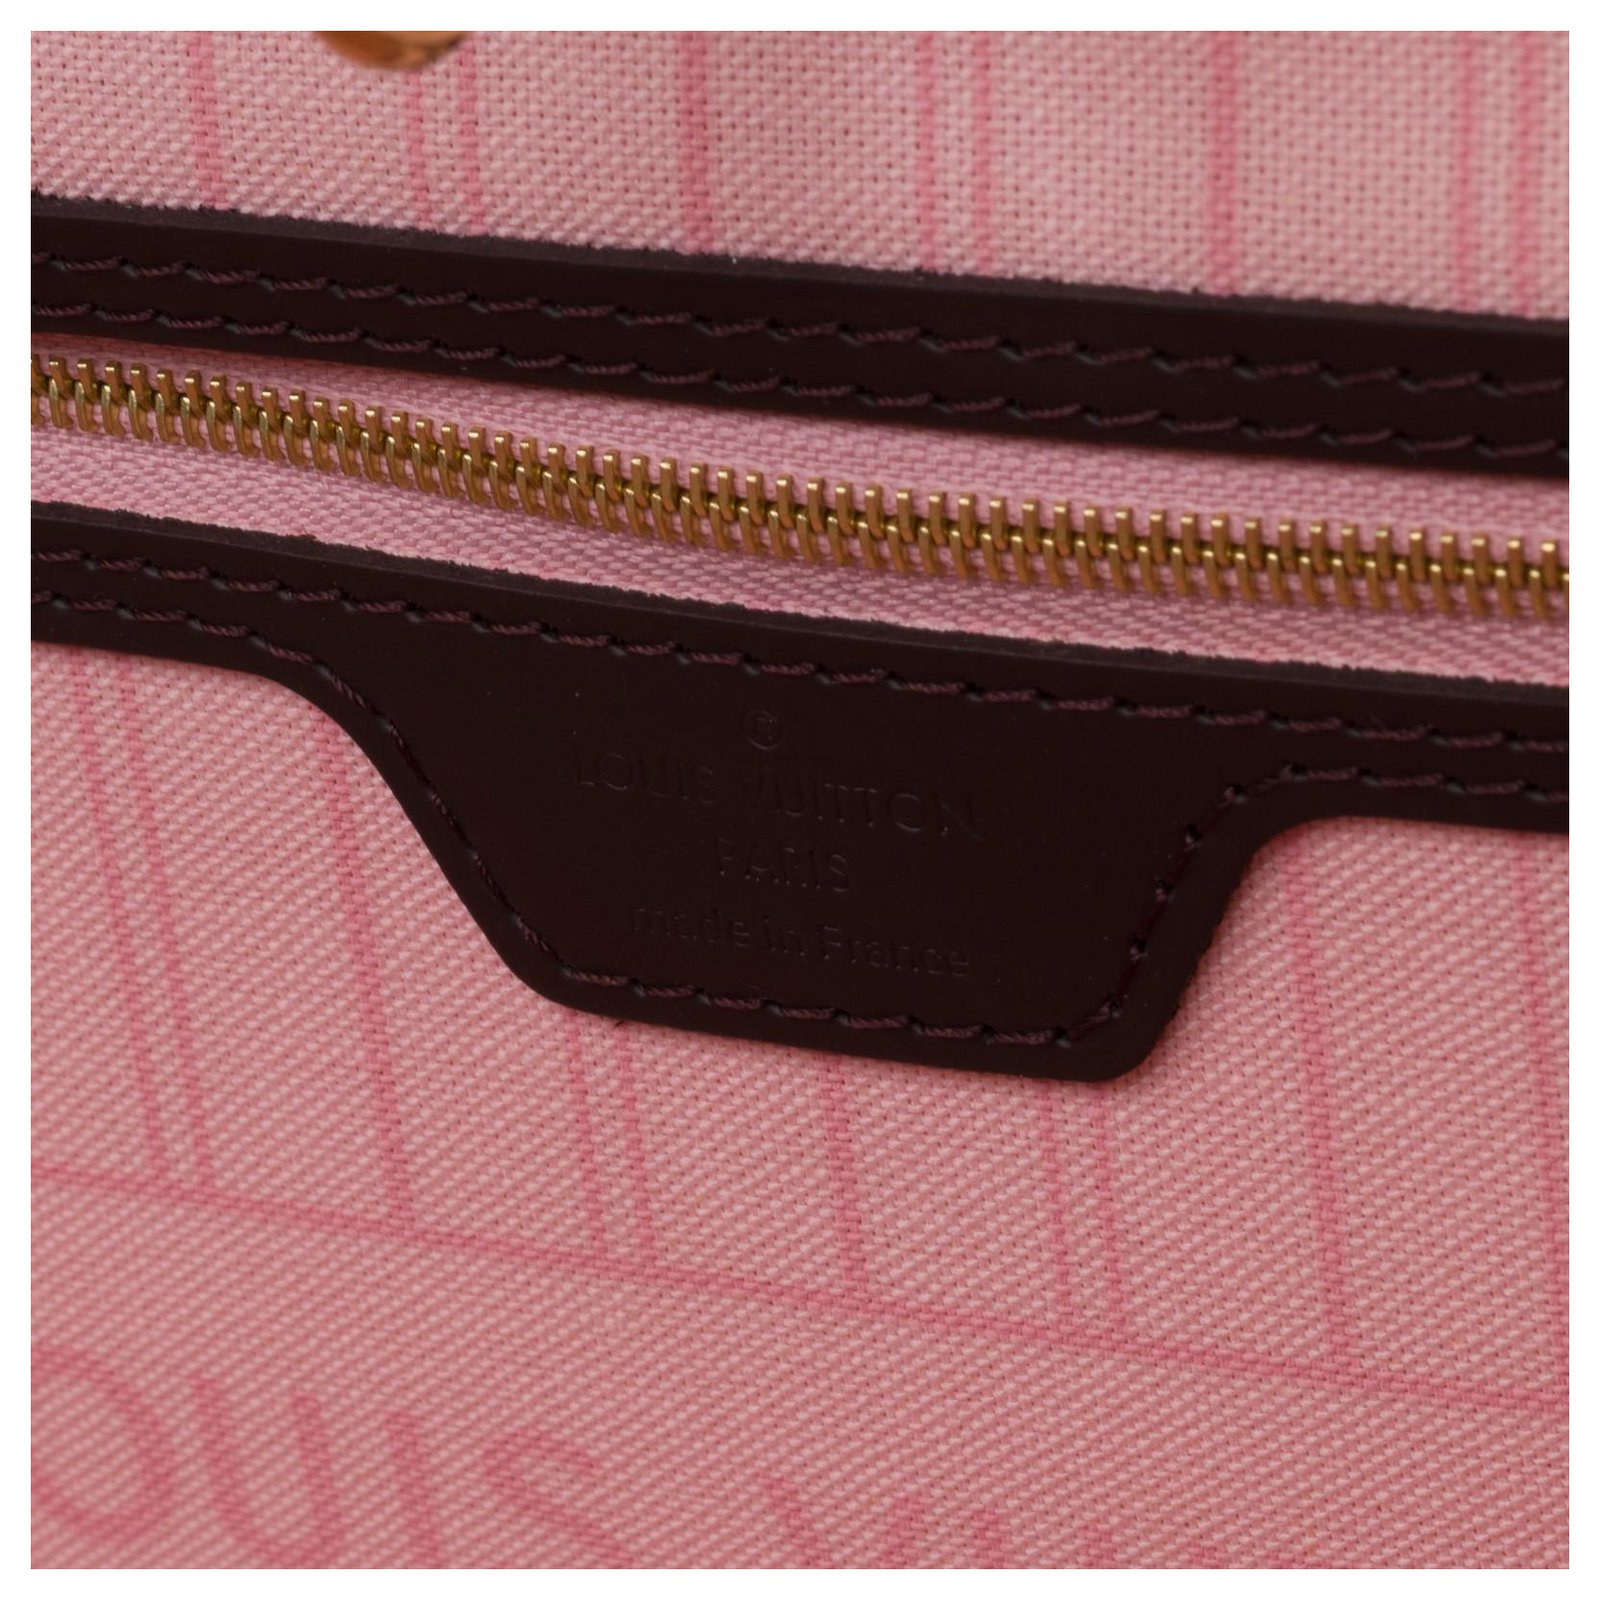 Customized Louis Vuitton Speedy Pink Panther and Marilyn handbag